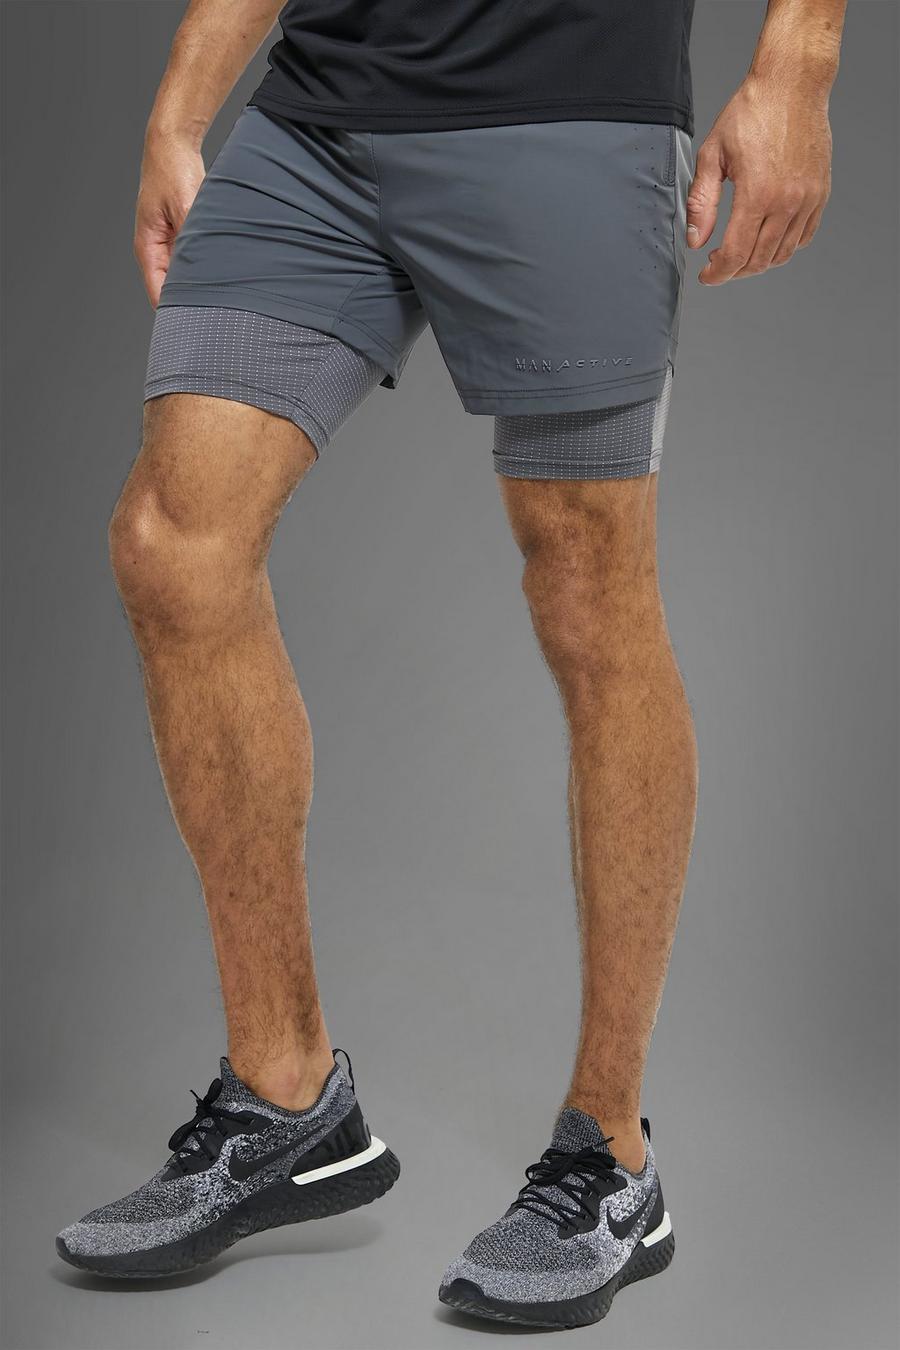 Pantalón corto MAN Active deportivo 2 en 1, Charcoal image number 1